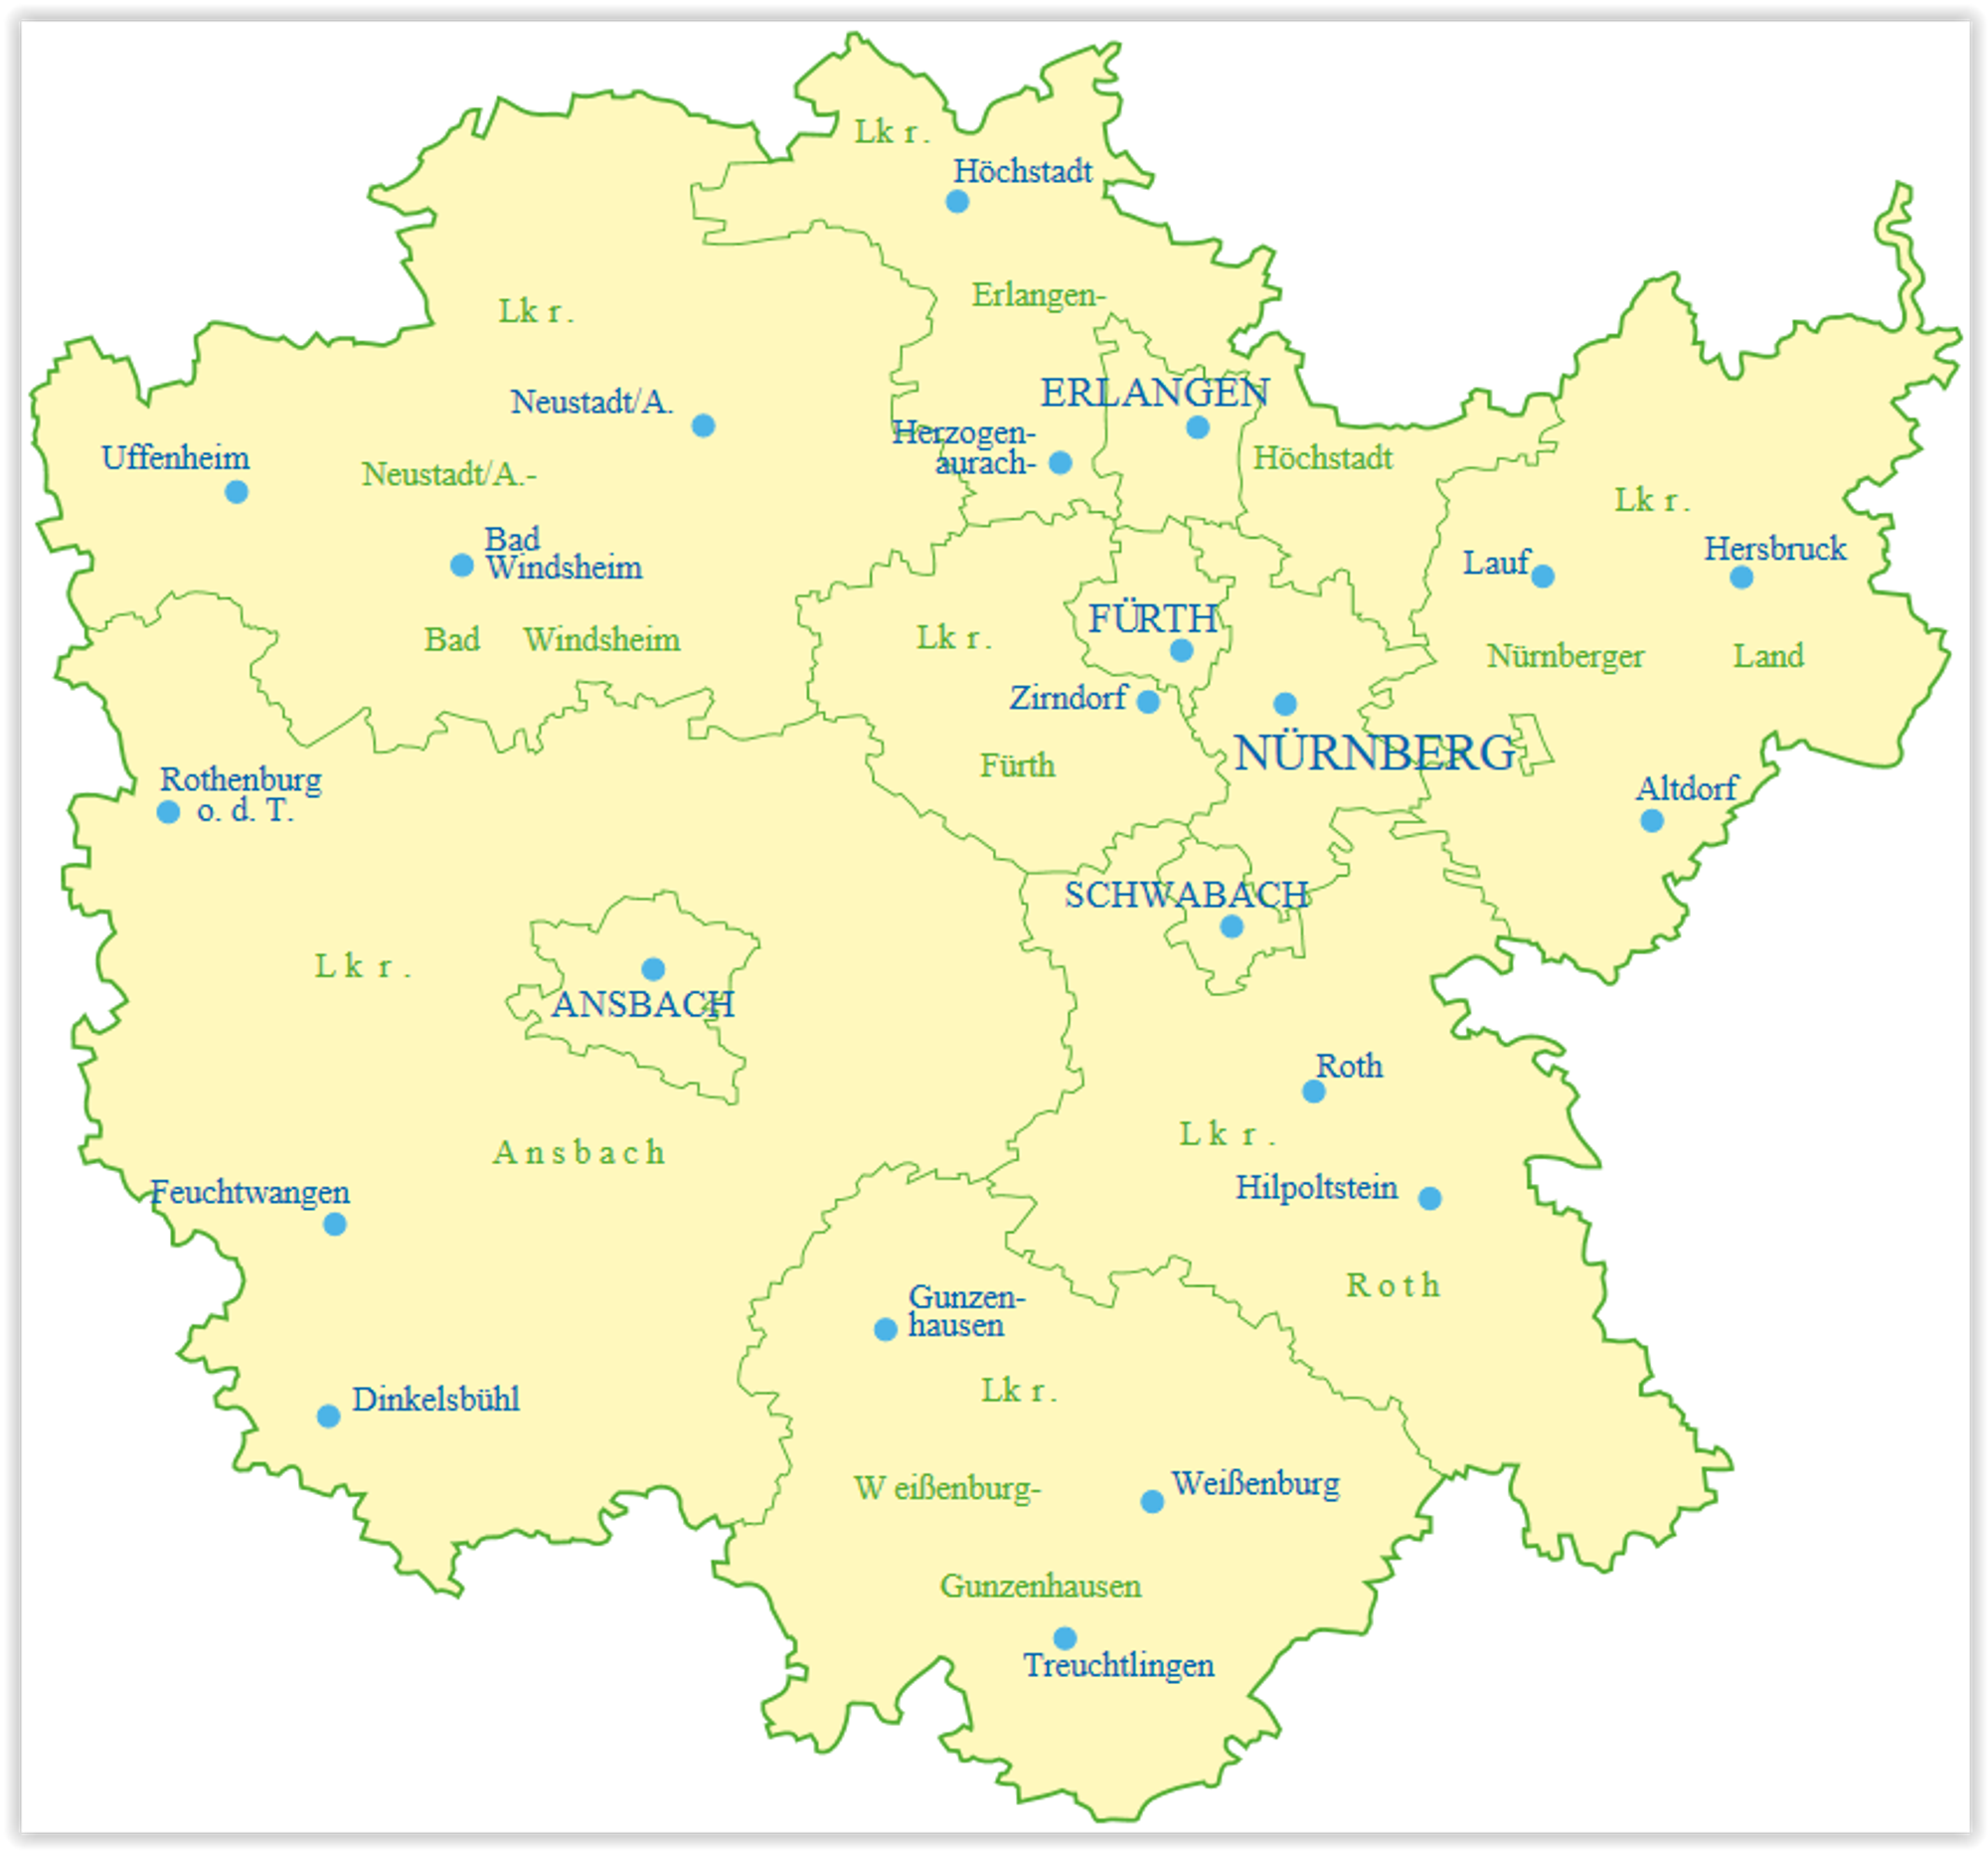 Mittelfranken - разделение на районы (Landkreis)